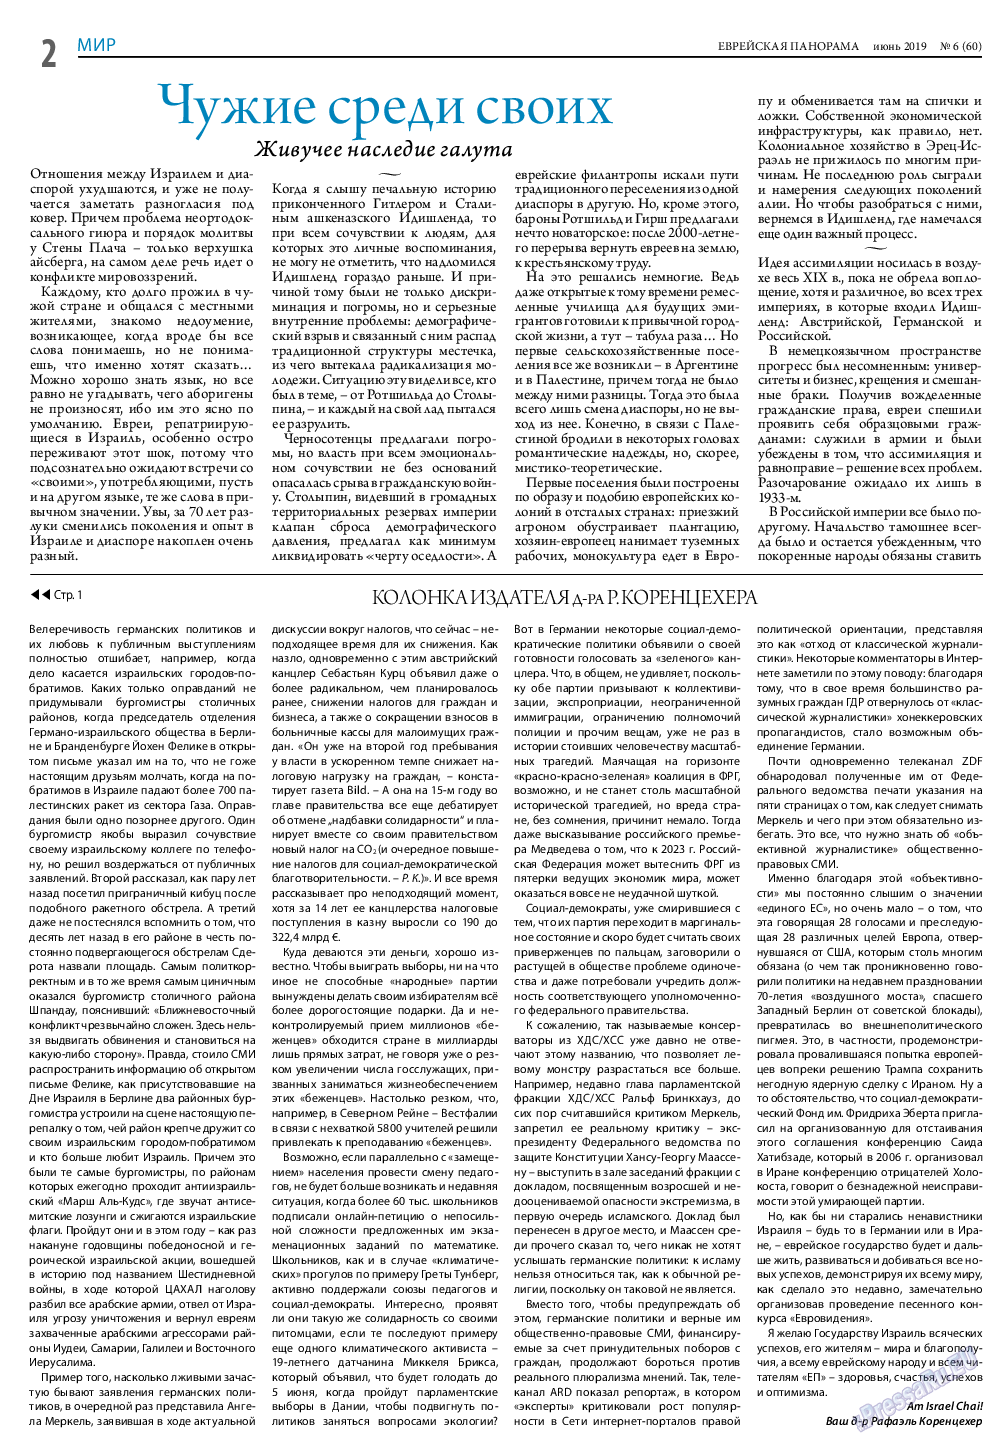 Еврейская панорама, газета. 2019 №6 стр.2